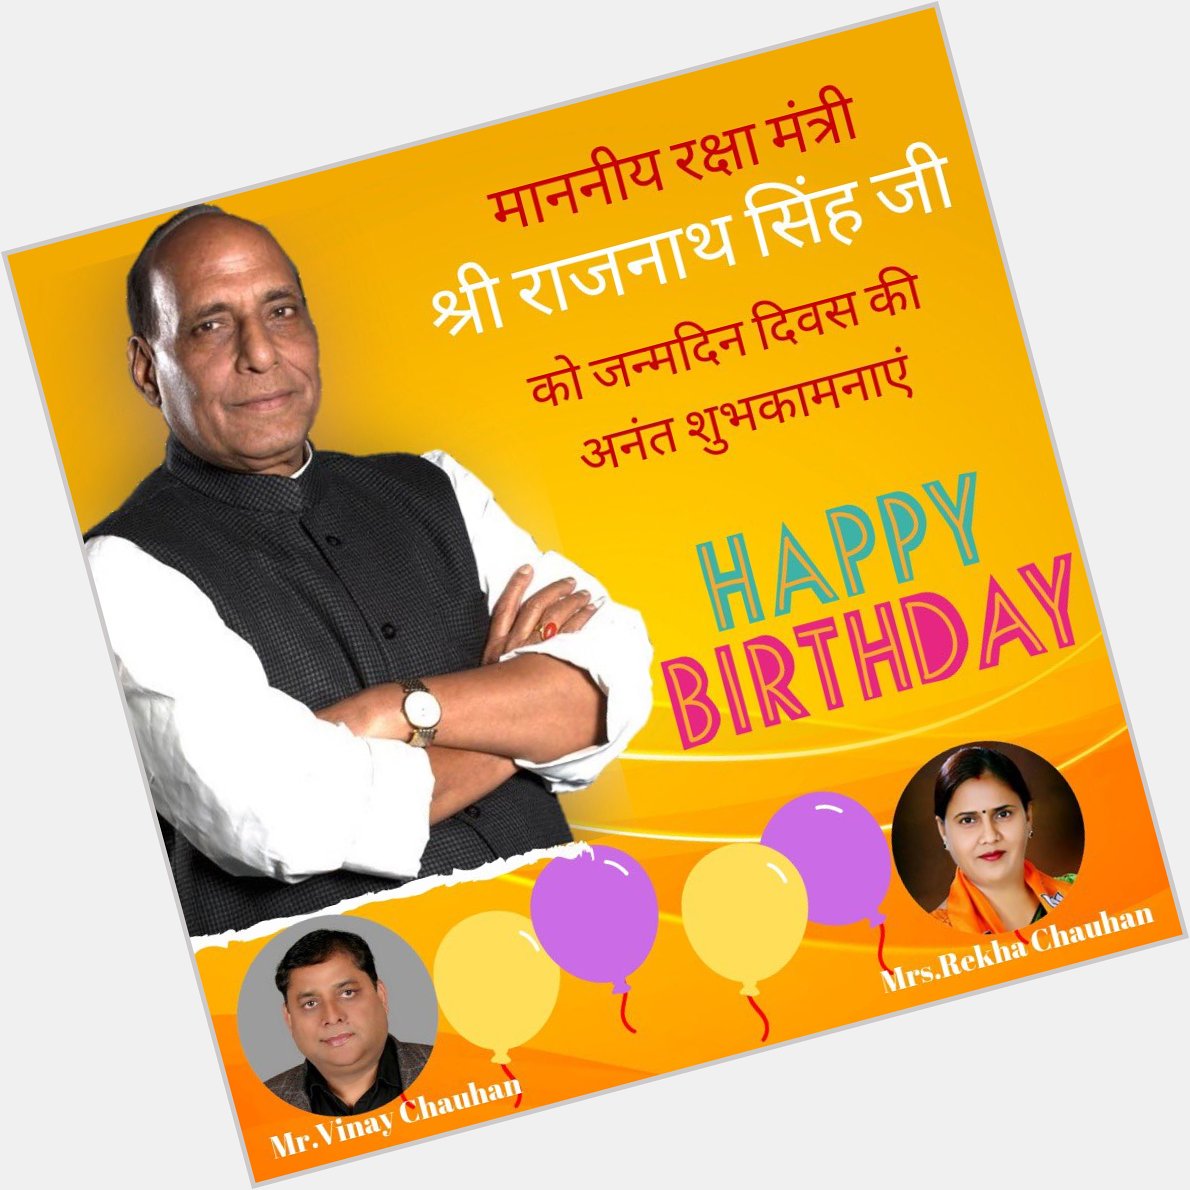 Wish you Happy birthday shri Rajnath singh ji 